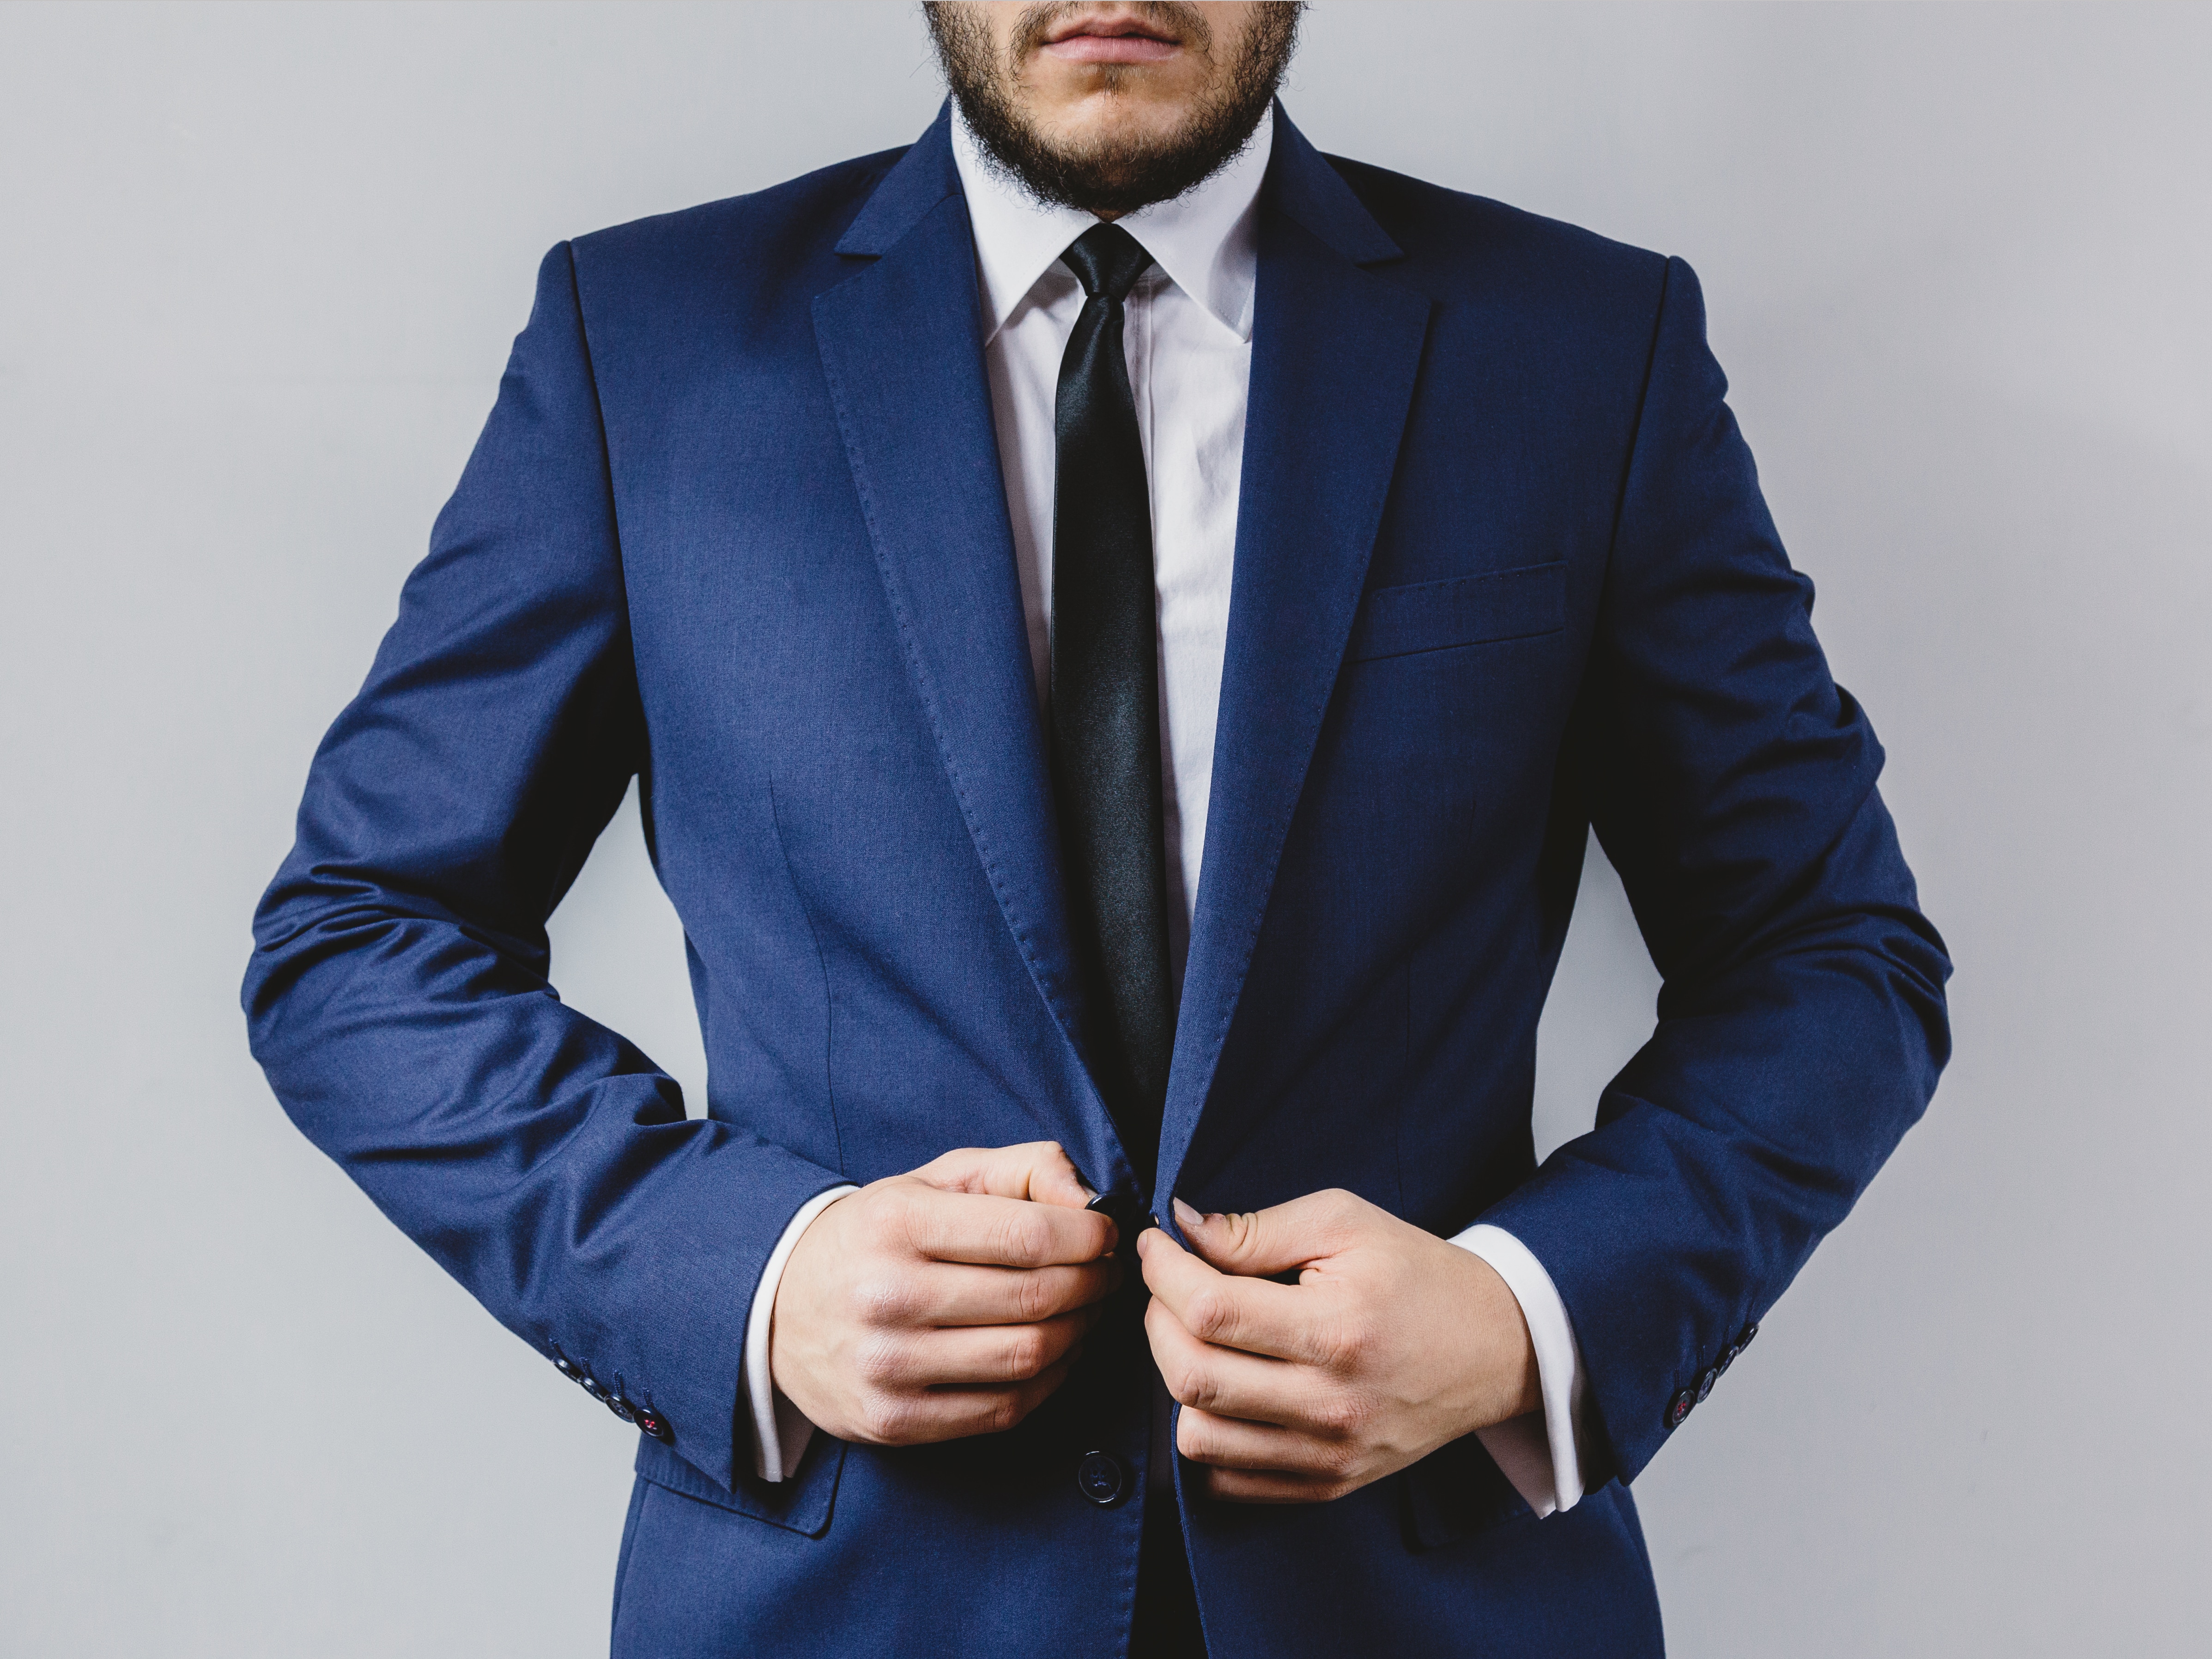 men's blue coat, white dress shirt and black necktie outfit